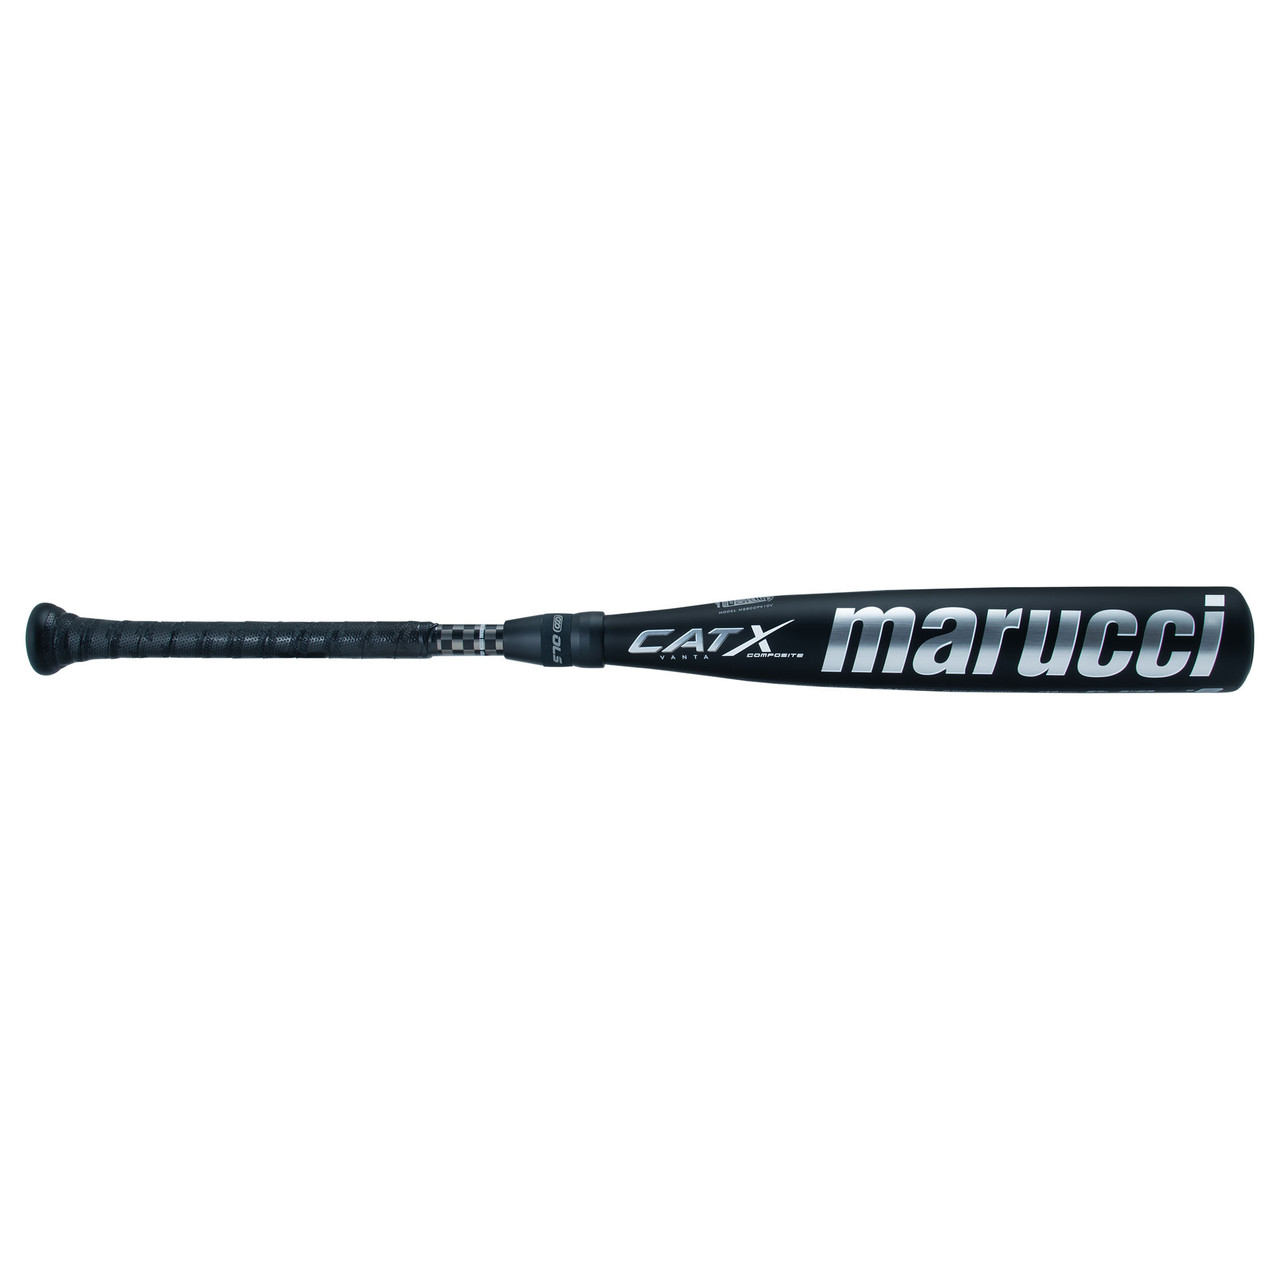 Marucci CATX Vanta Composite Senior League (-10) USSSA Baseball Bat:  MSBCCPX10V